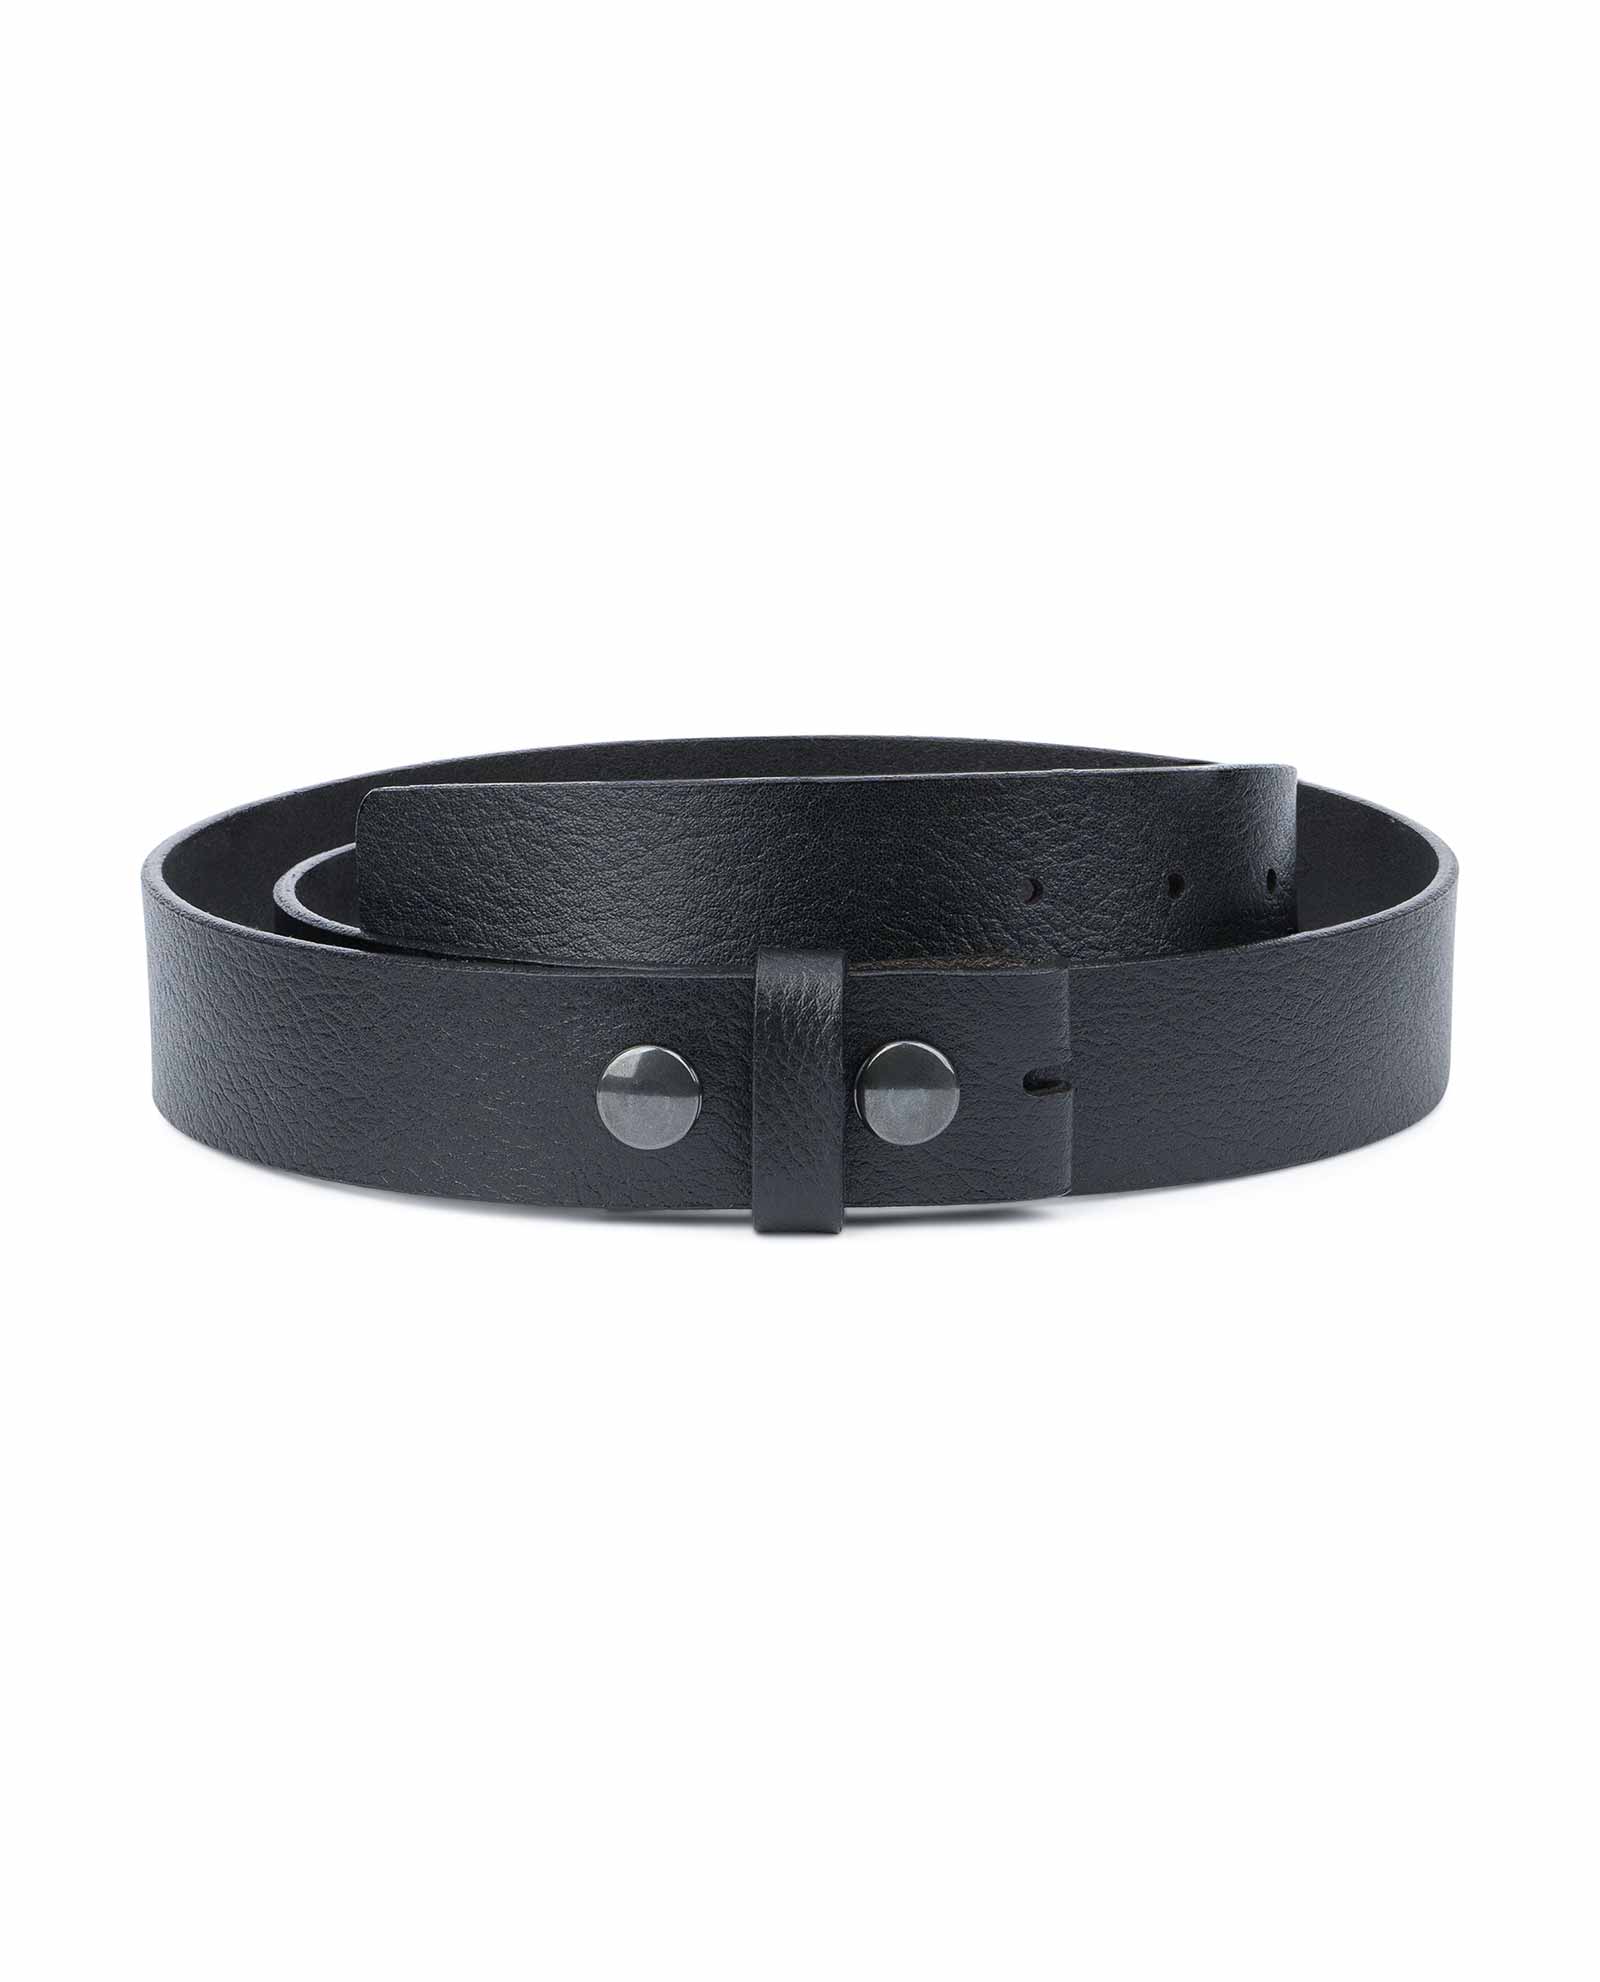 Buy Snap On Belt Without Buckle | Black Leather | LeatherBeltsOnline.com